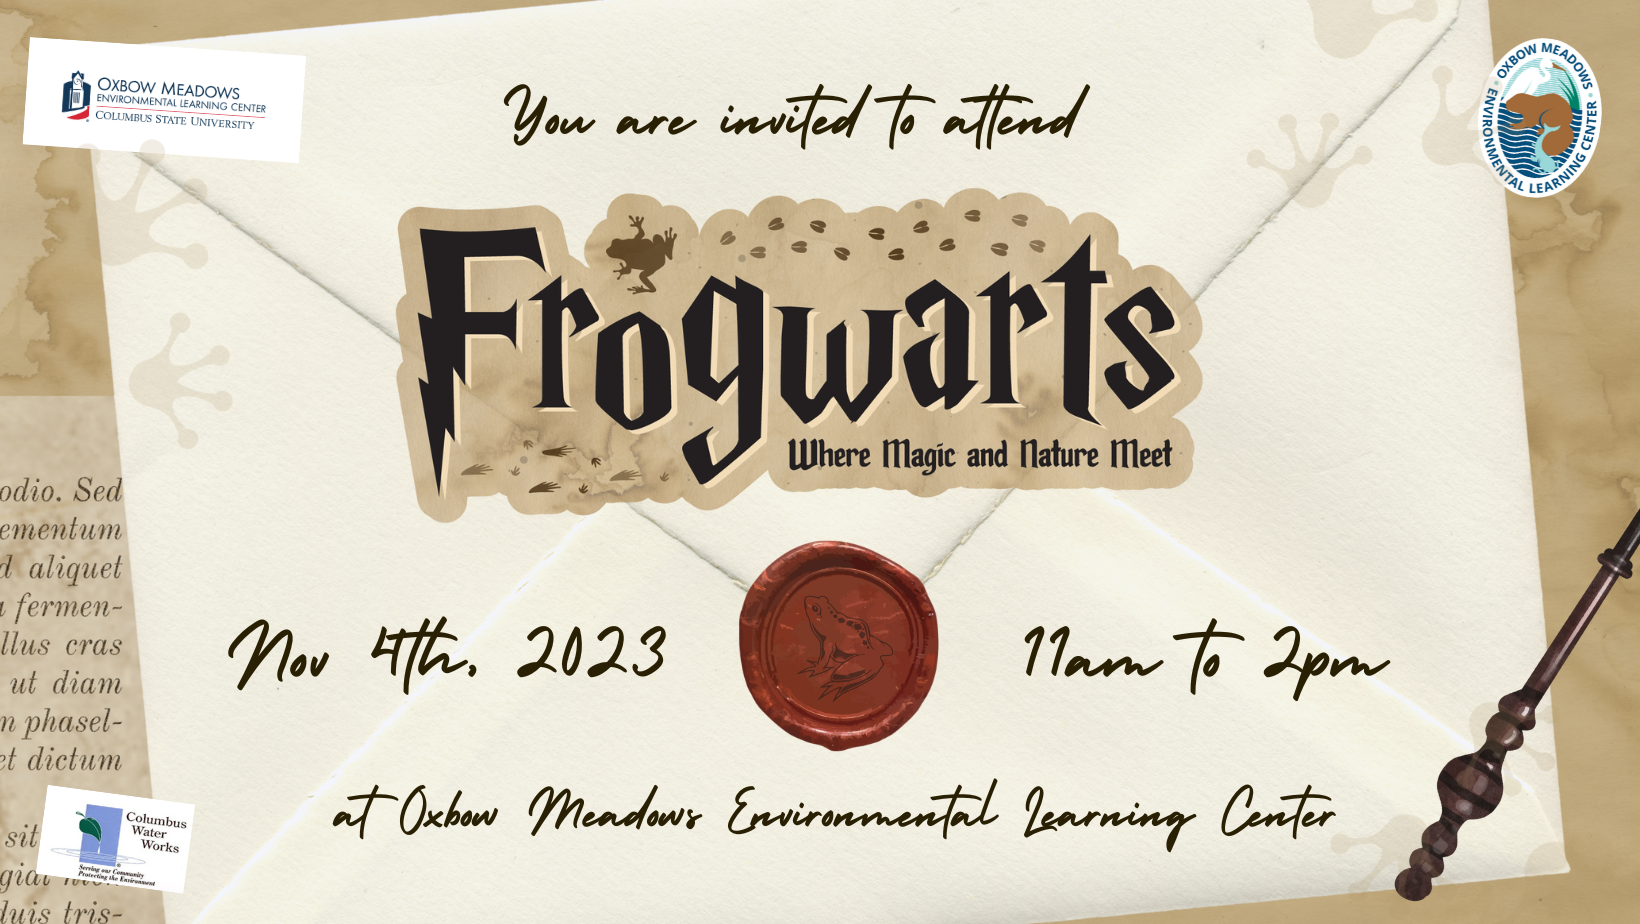 Frogwarts